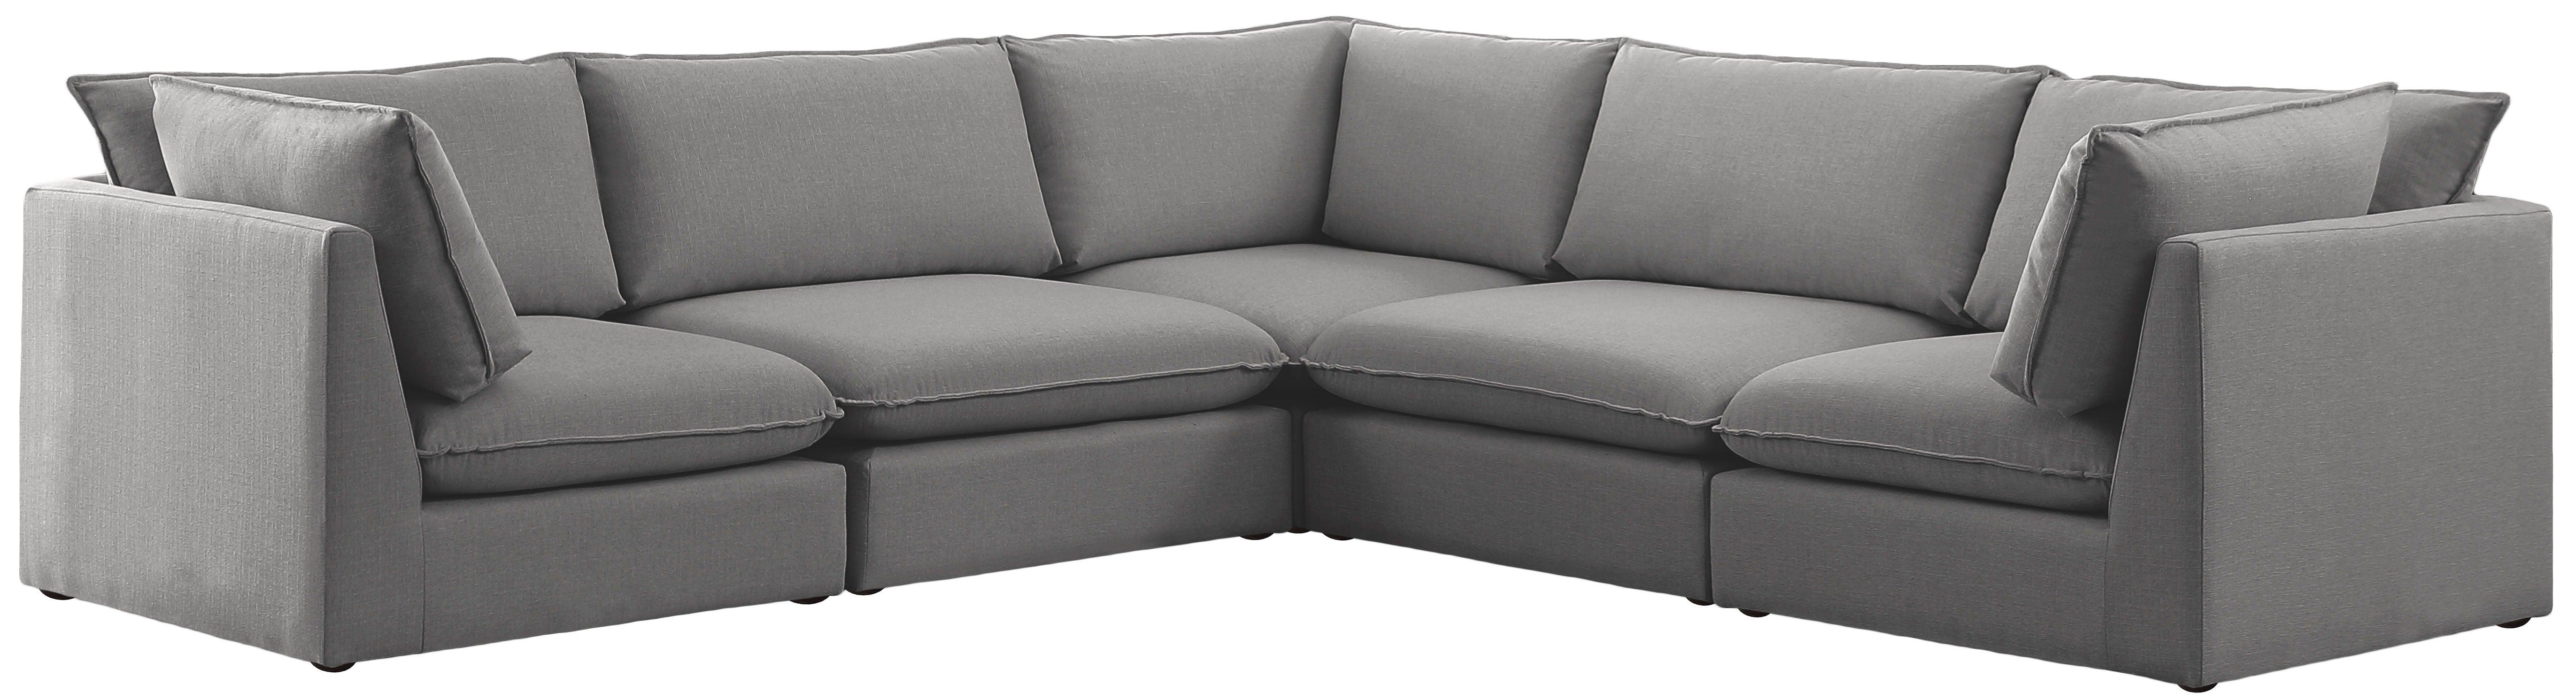 Meridian Furniture - Mackenzie - Modular Sectional 5 Piece - Gray - Modern & Contemporary - 5th Avenue Furniture